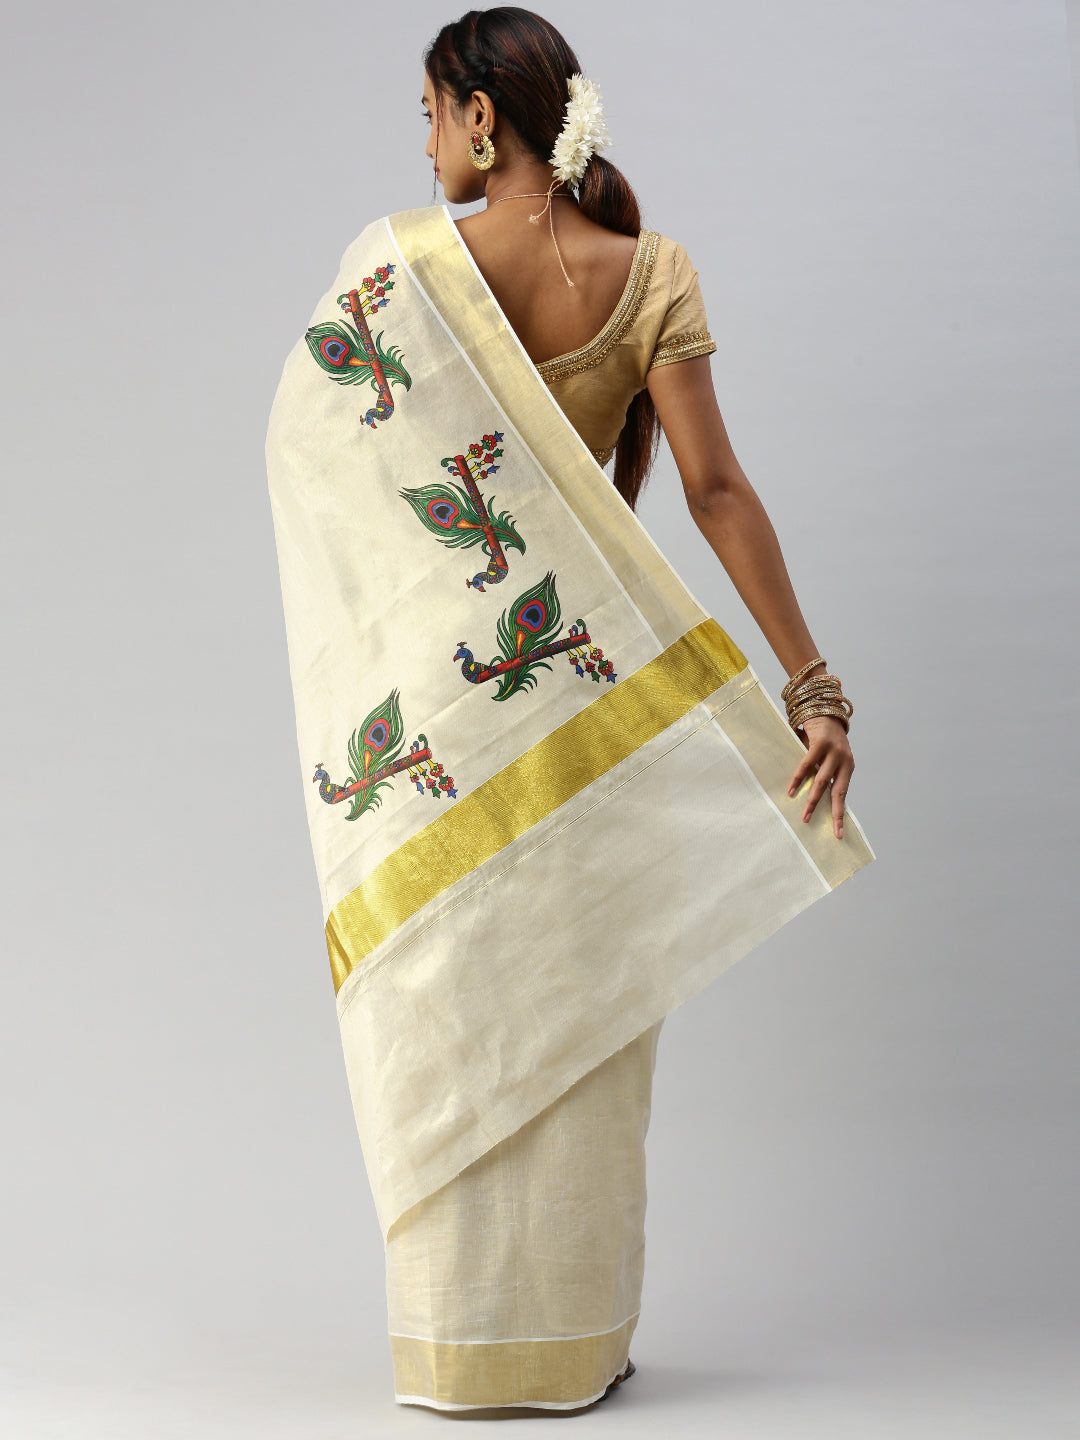 New model Kerala kasavu saree blouse designs - YouTube